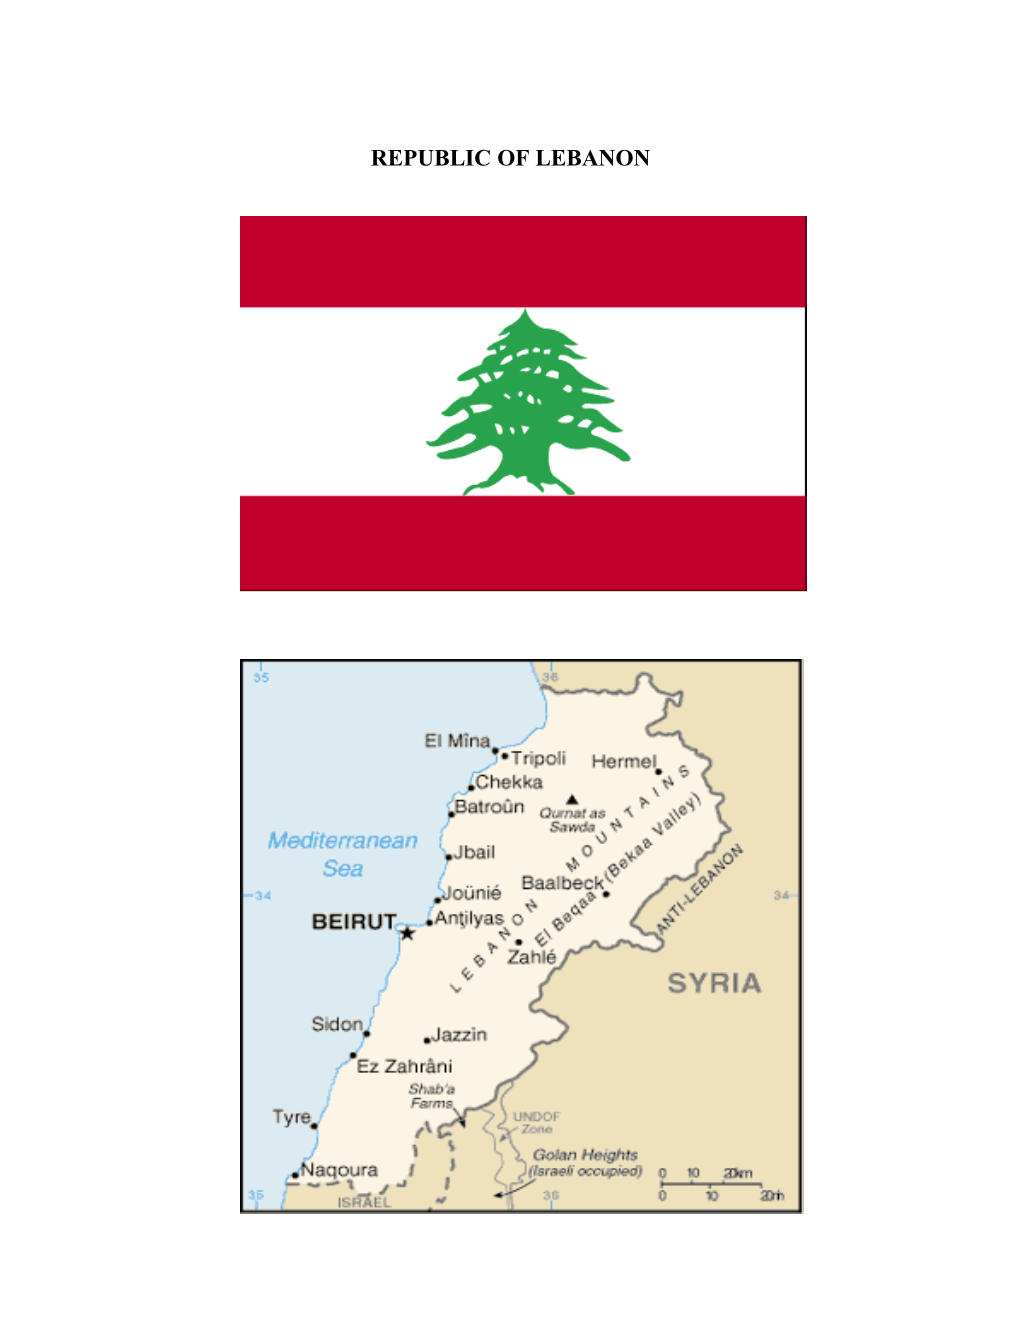 Background on the Republic of Lebanon